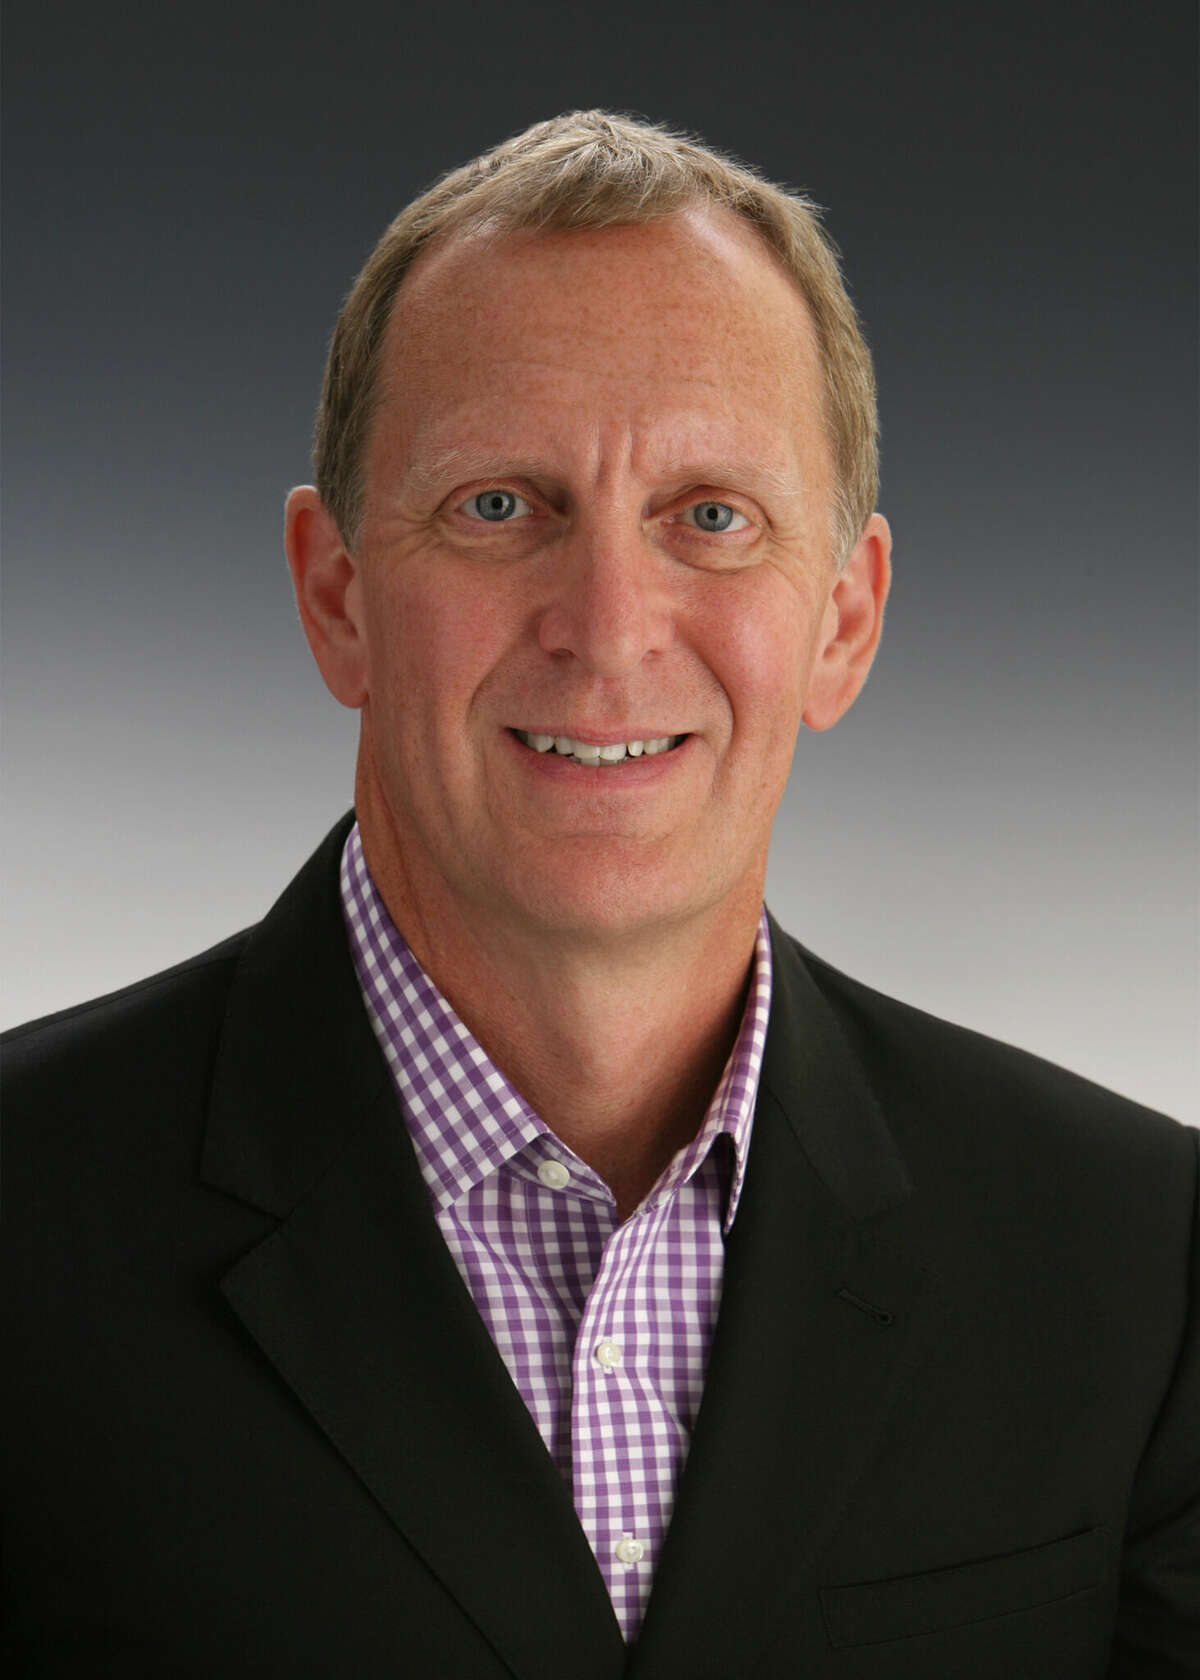 Michael A. Jones, CEO of The New HVN LLC